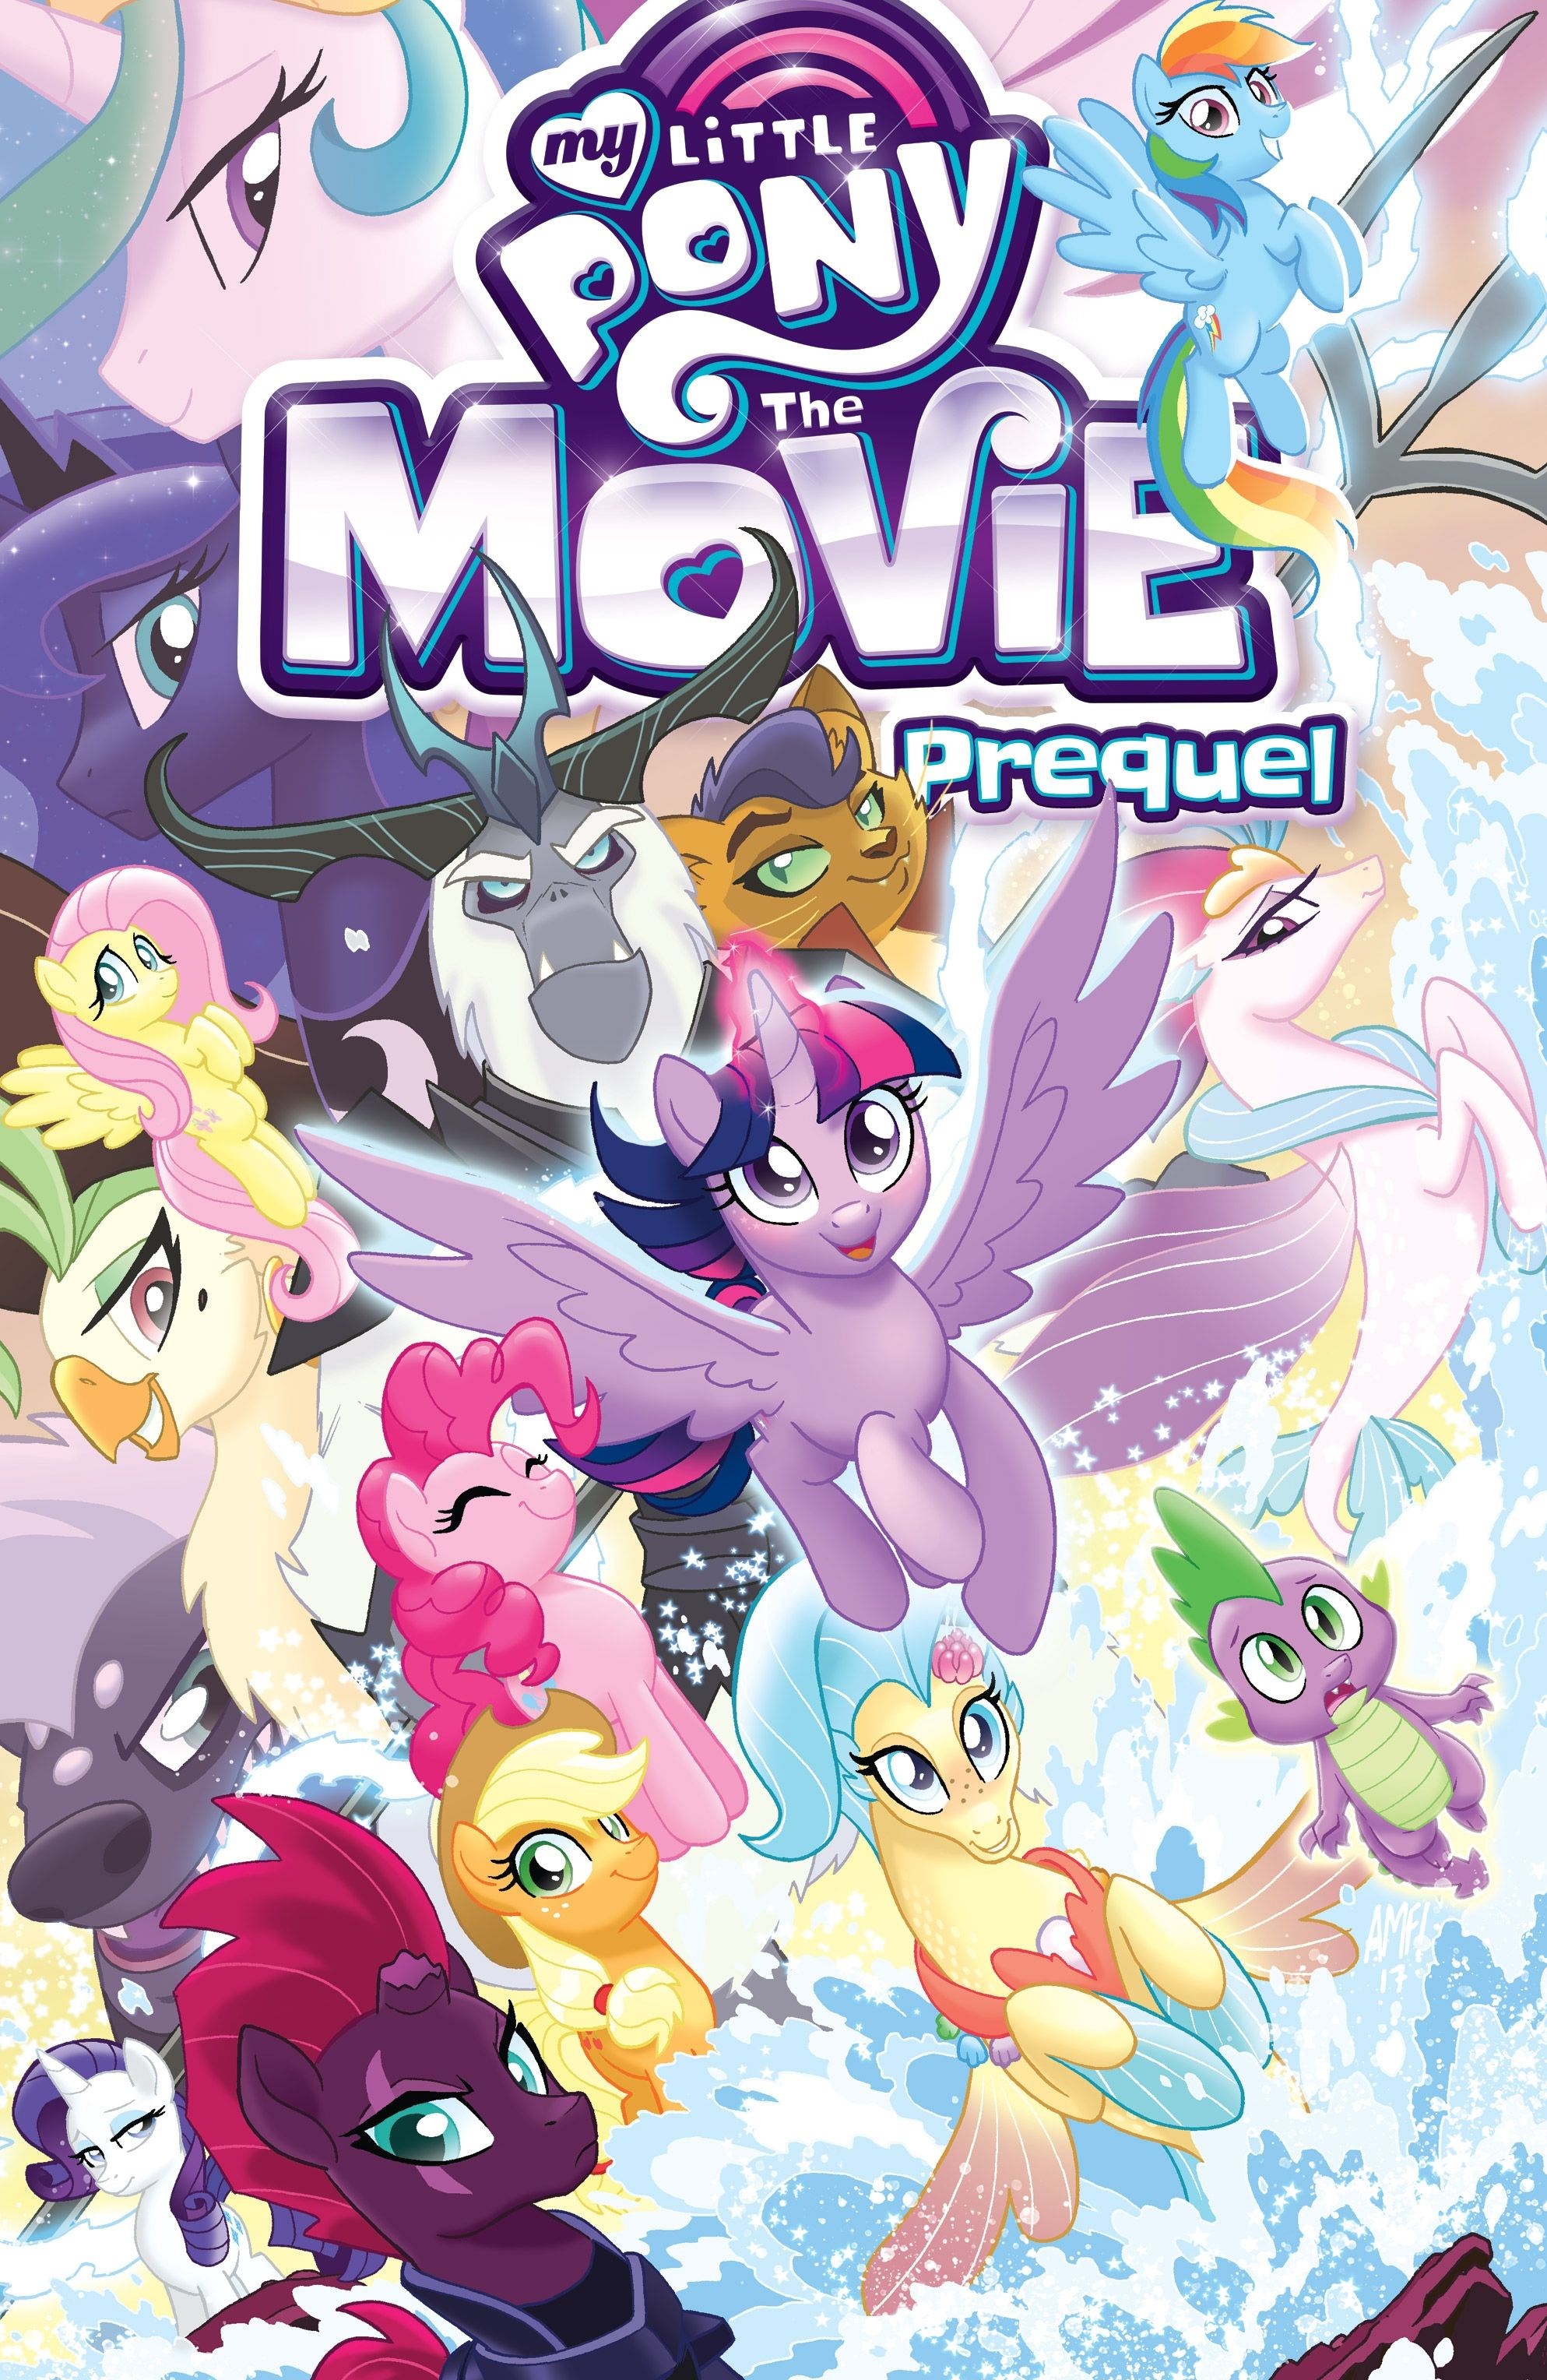 My Little Pony: The Movie Prequel Art